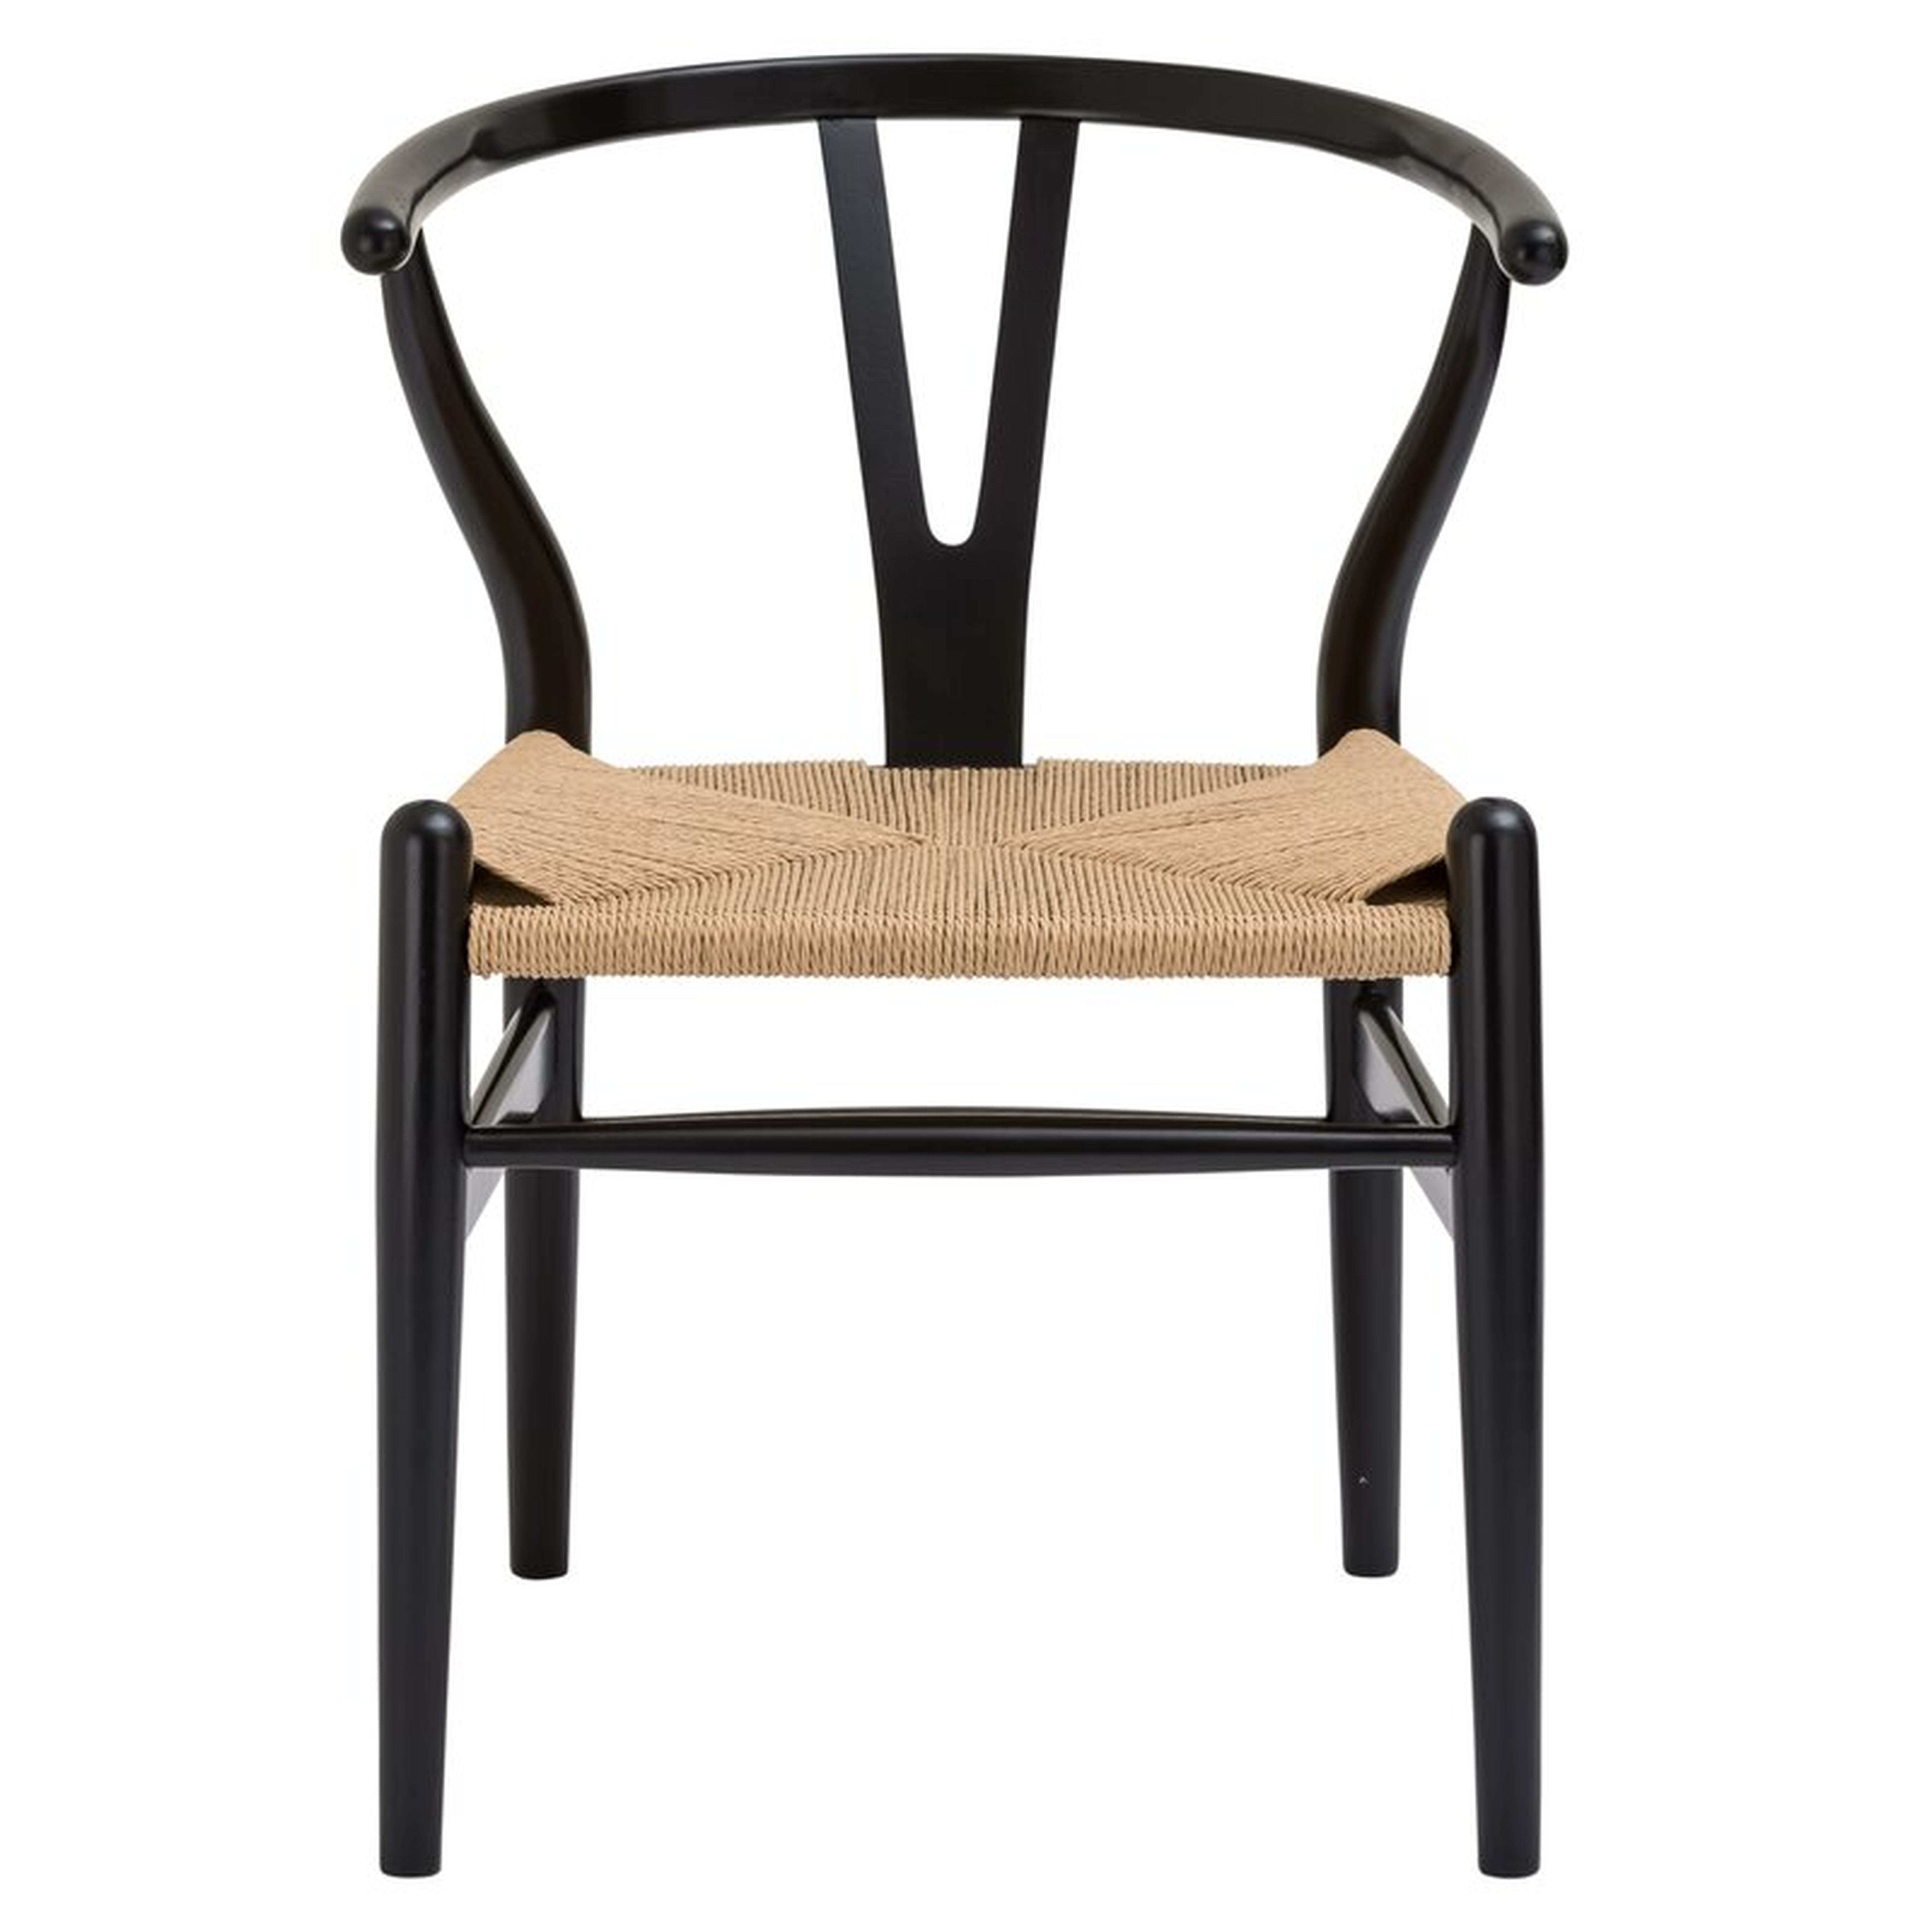 Mistana Dayanara Solid Wood Slat Back Dining Chair in Black - Wayfair